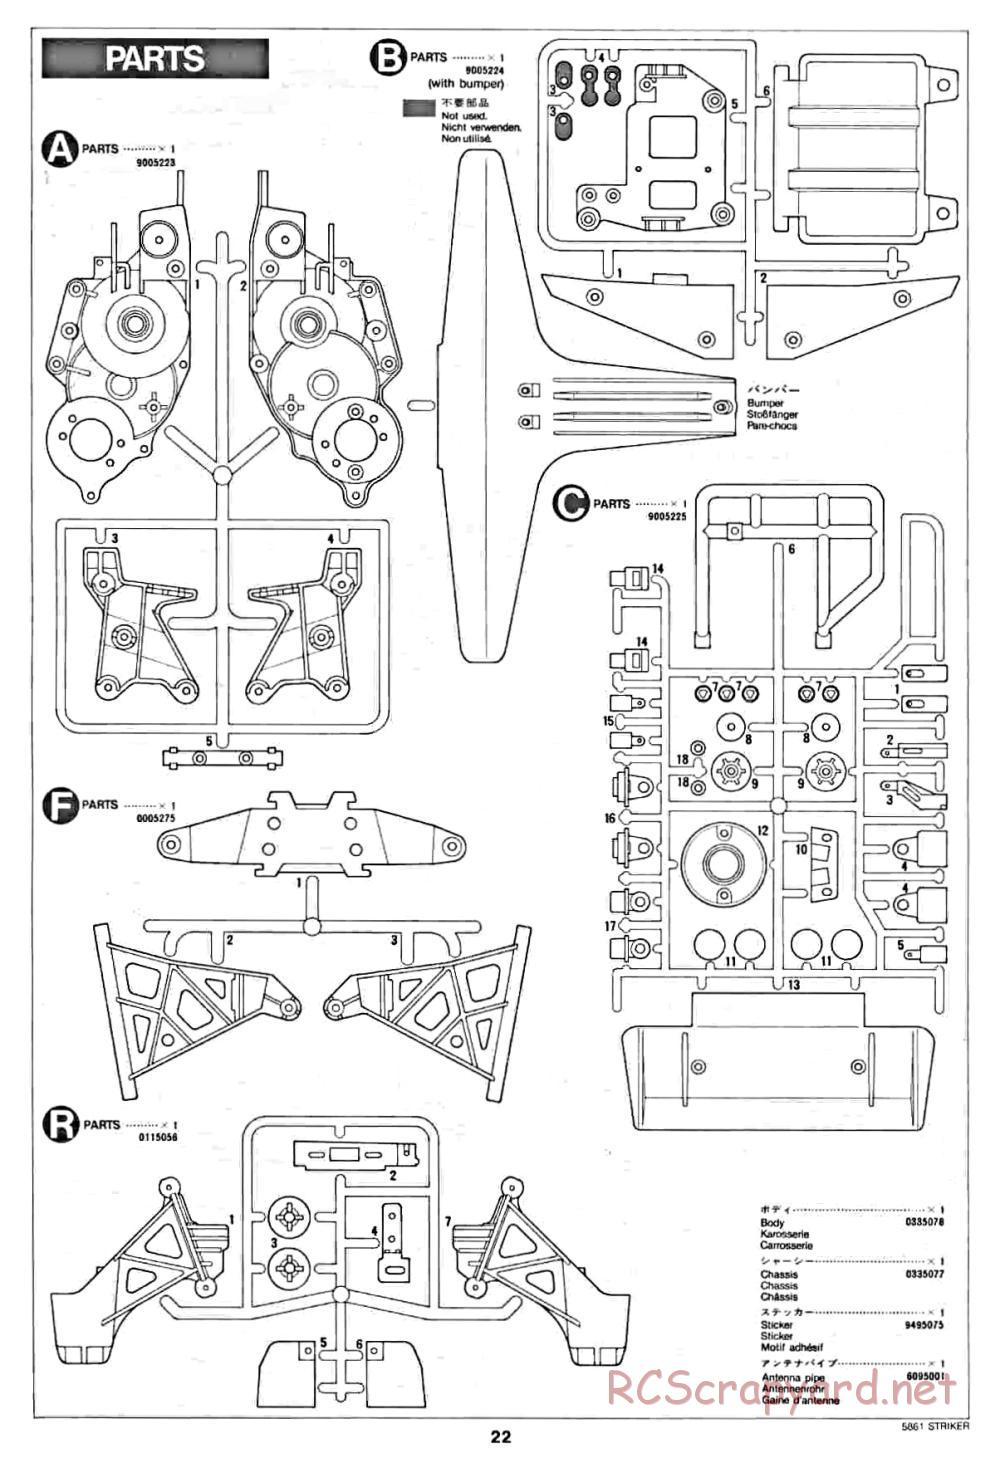 Tamiya - Striker - 58061 - Manual - Page 22